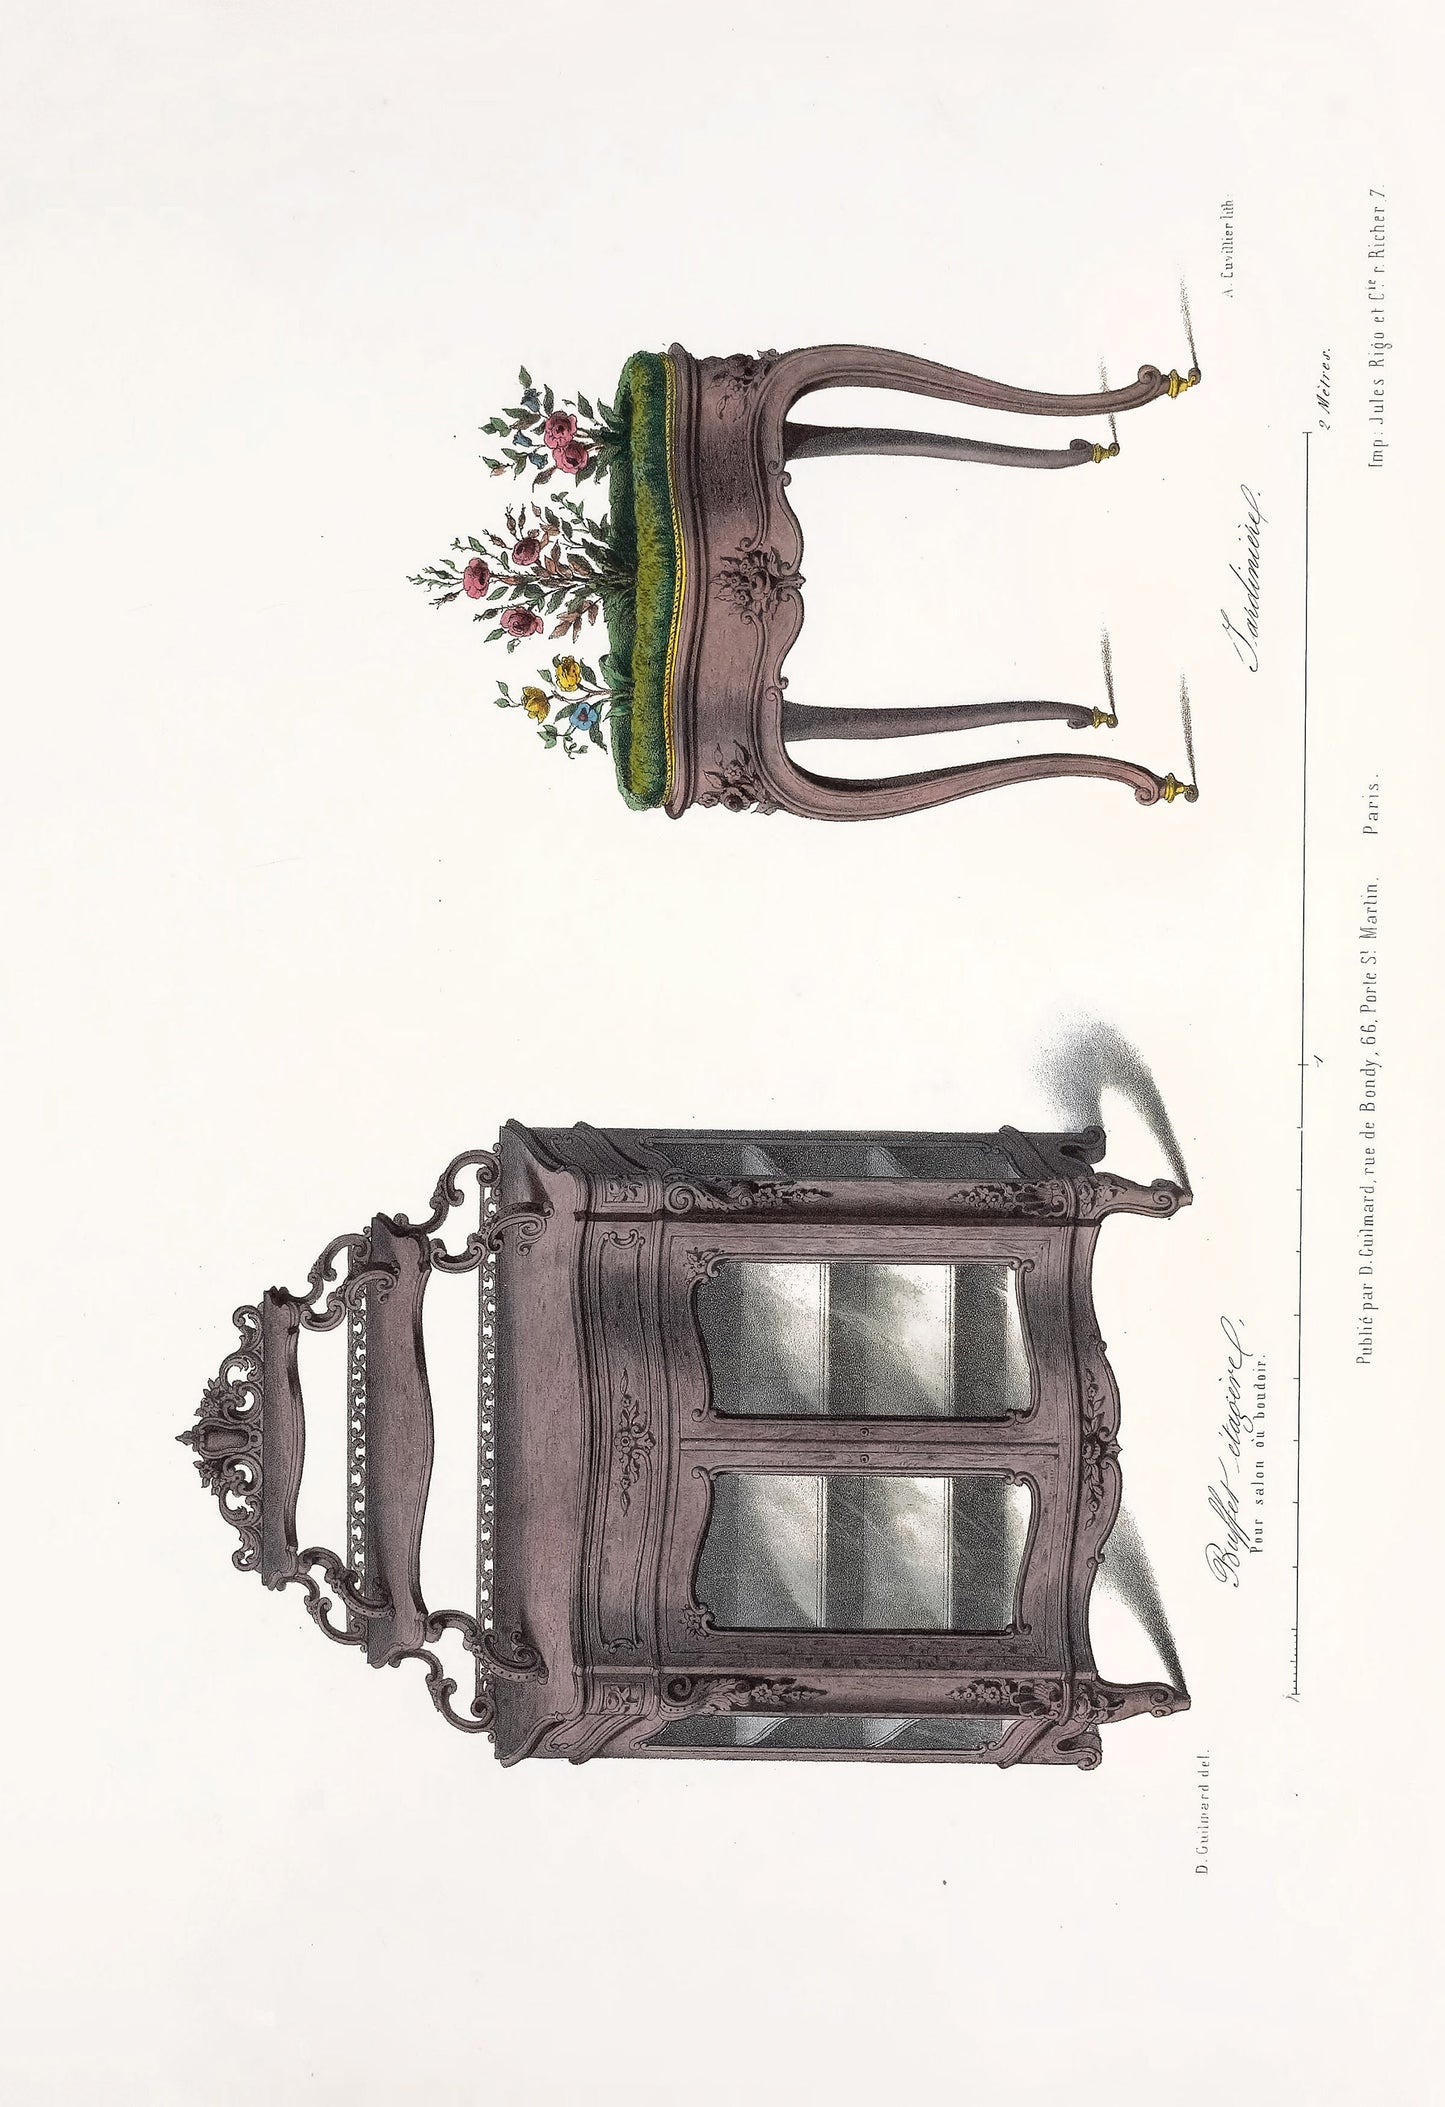 French Home Furniture & Decor Illustrations Set 2 [76 Images]